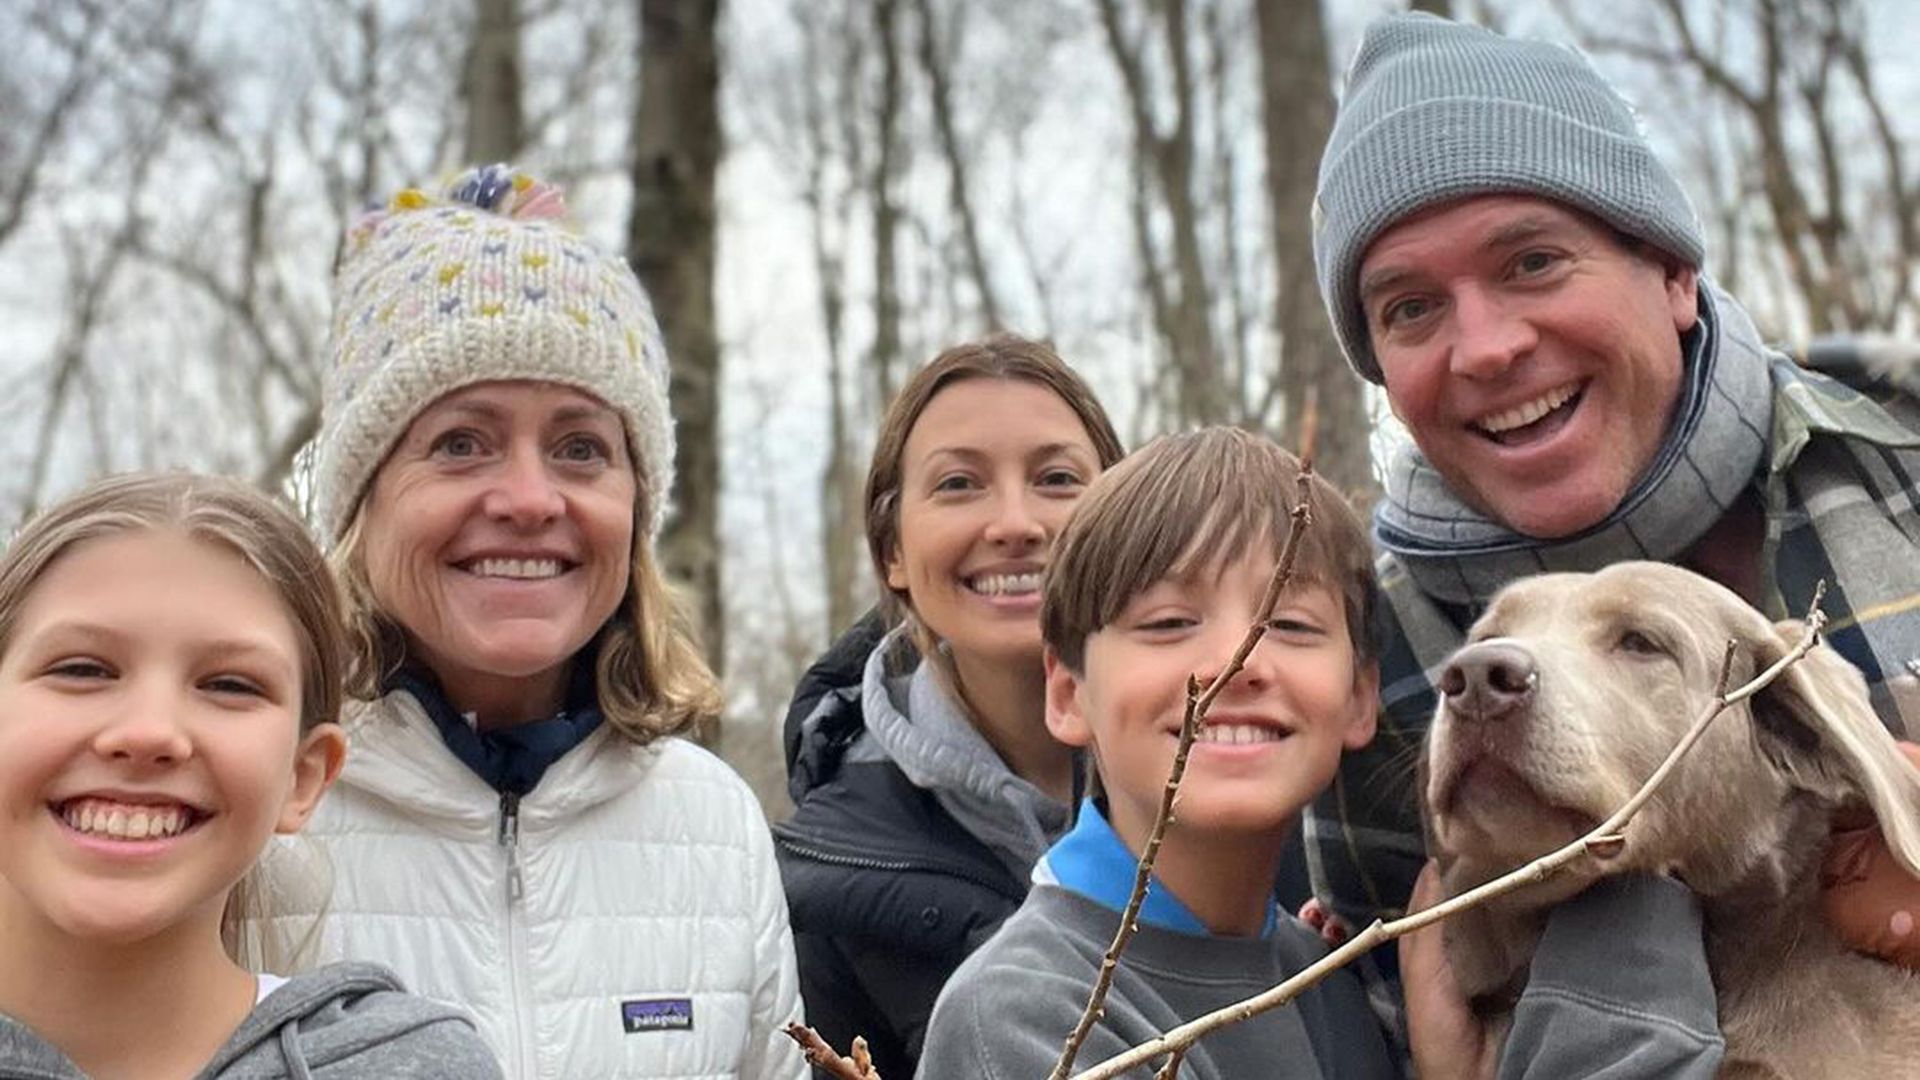 Meet NCIS star Michael Weatherly's three children